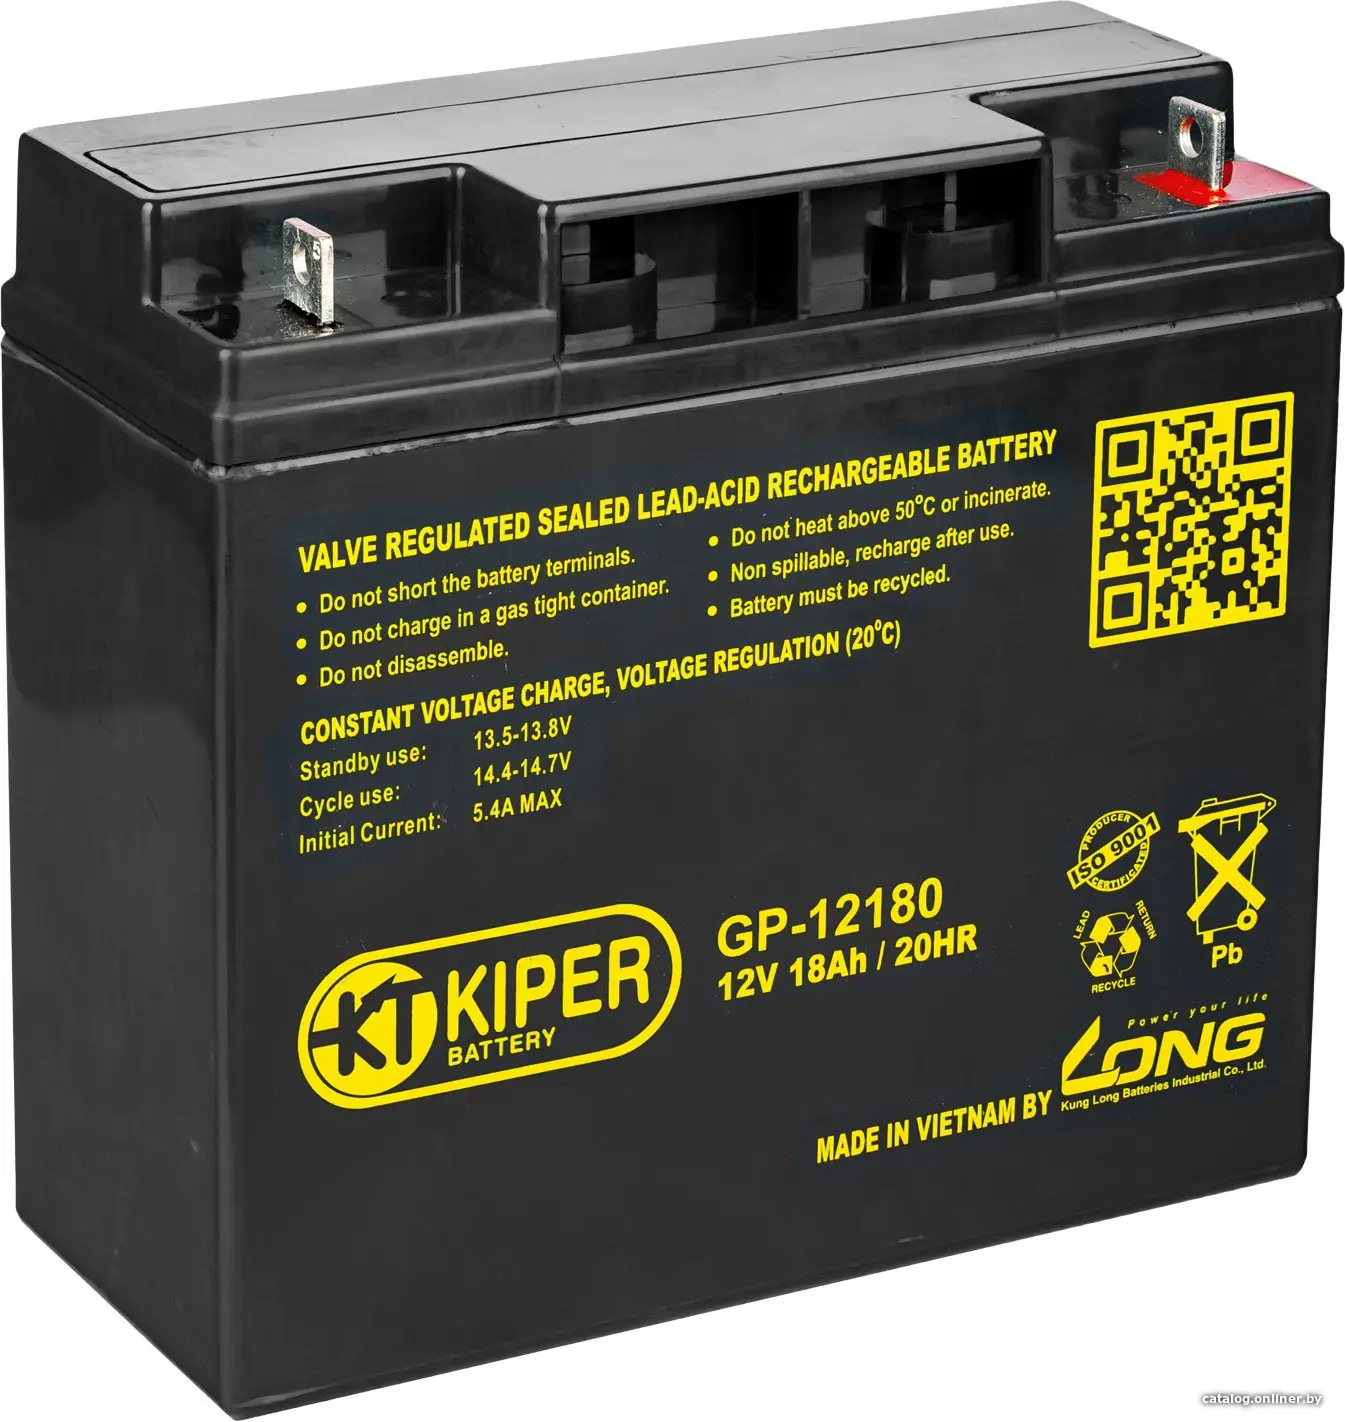 Купить Аккумуляторная батарея Kiper GP-12180 12V/18Ah, цена, опт и розница